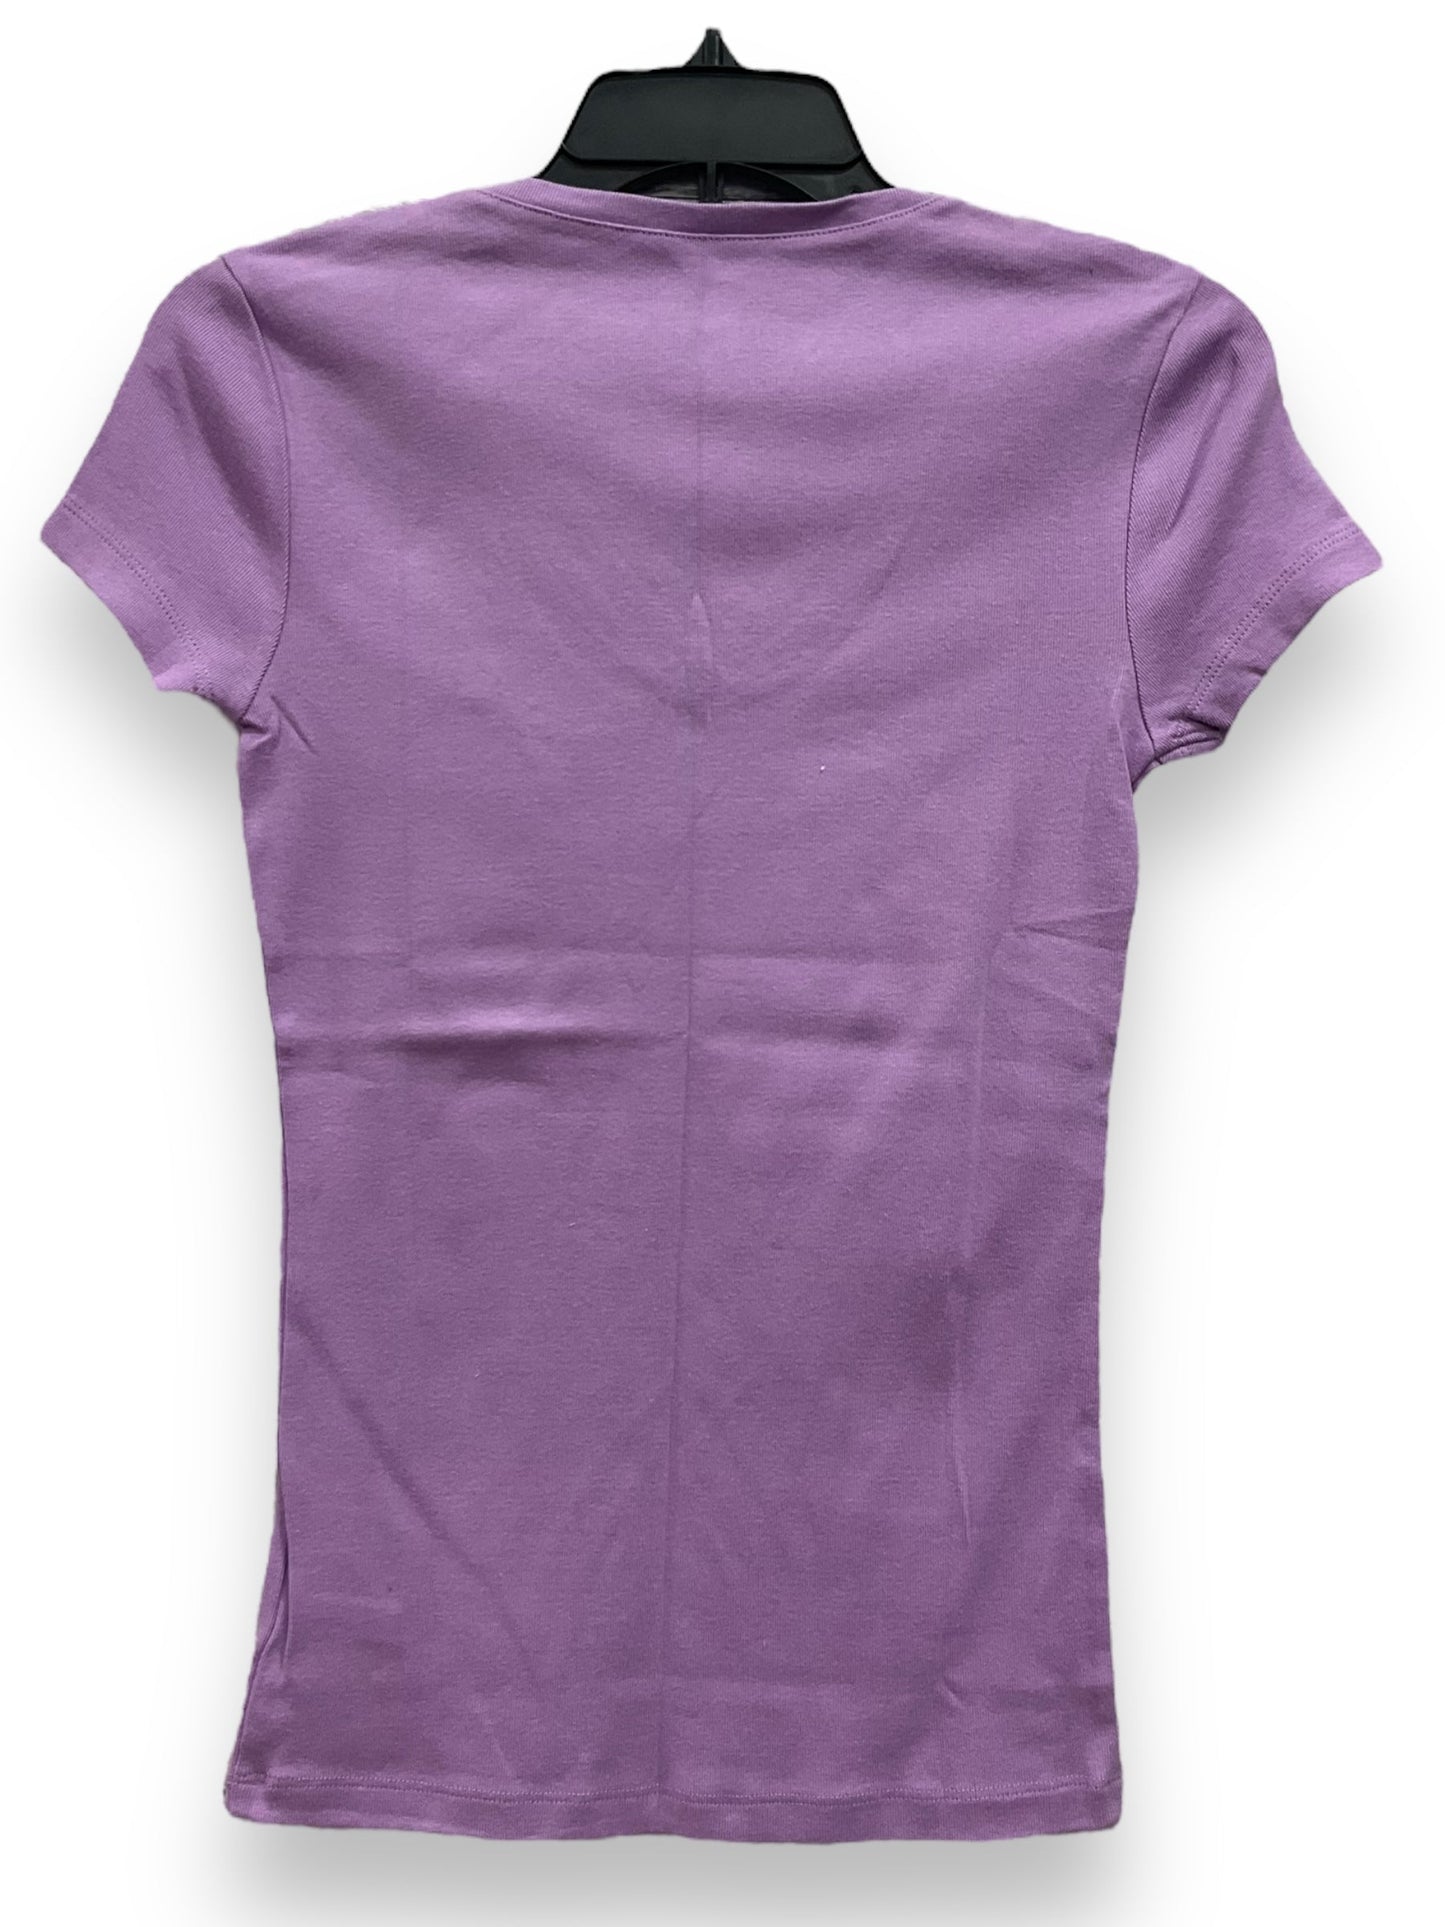 Purple Top Short Sleeve Basic Tommy Hilfiger, Size S